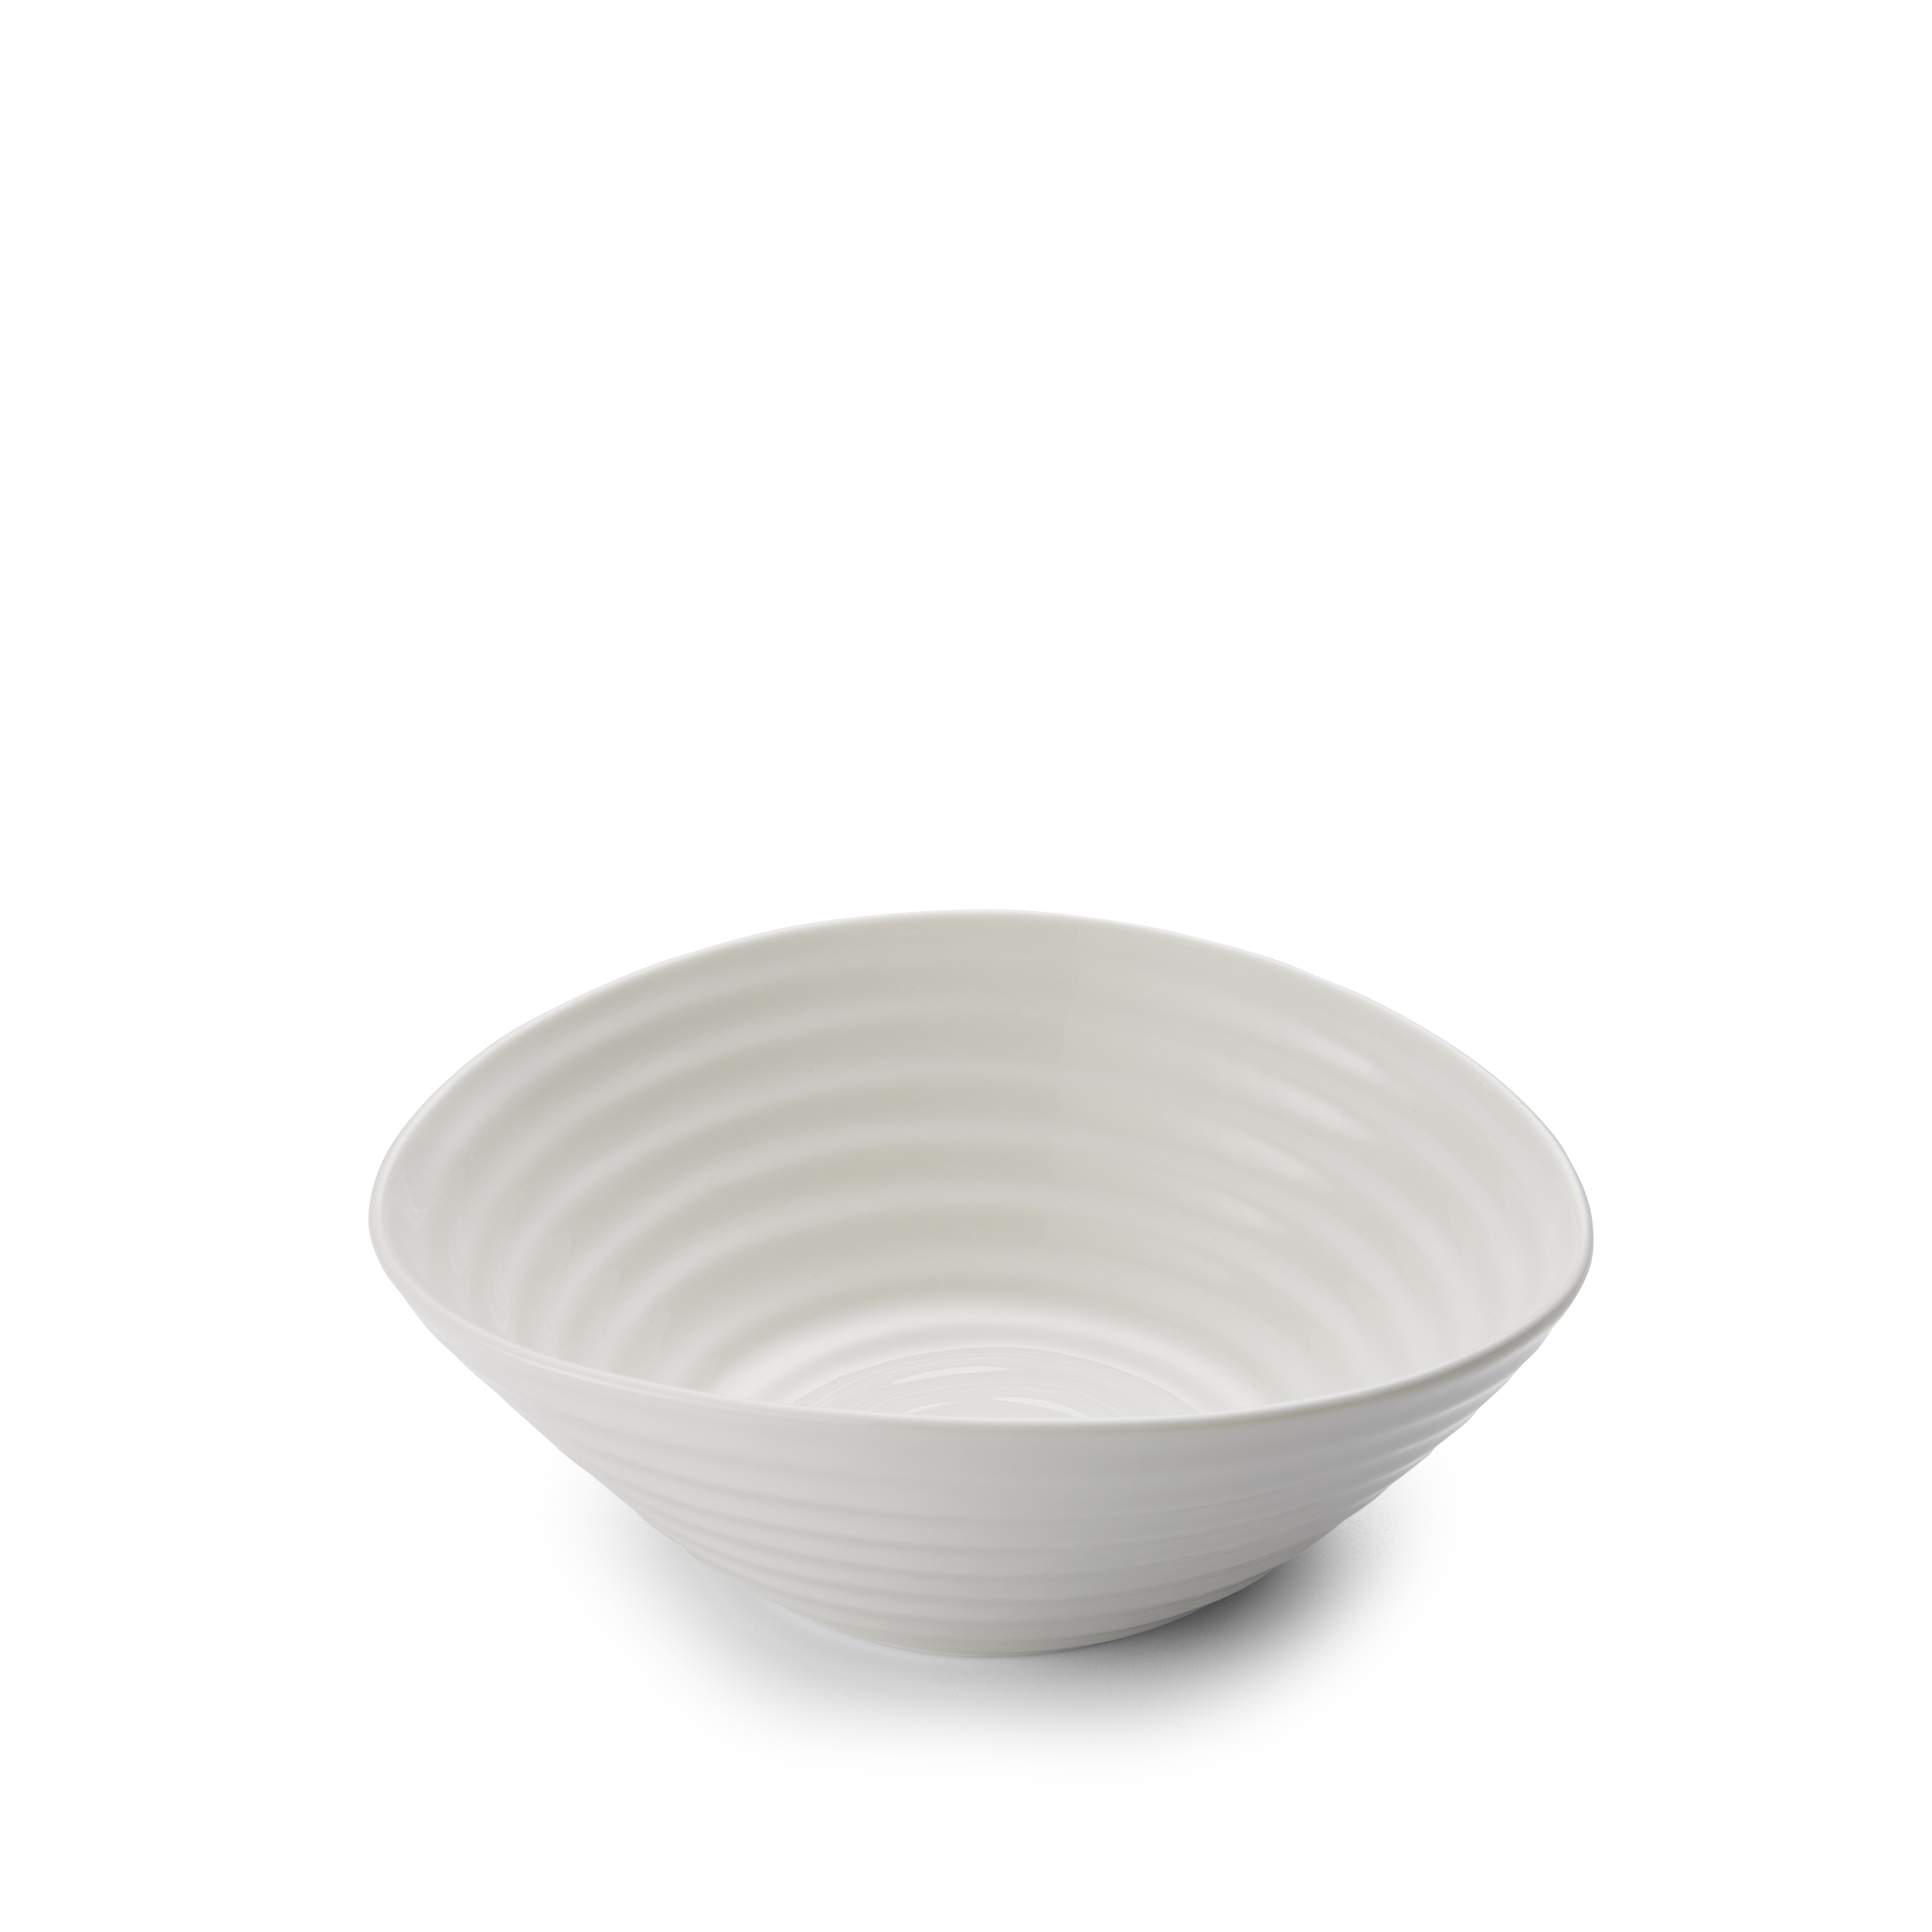 Sophie Conran Set of 4 Cereal Bowls, White image number null